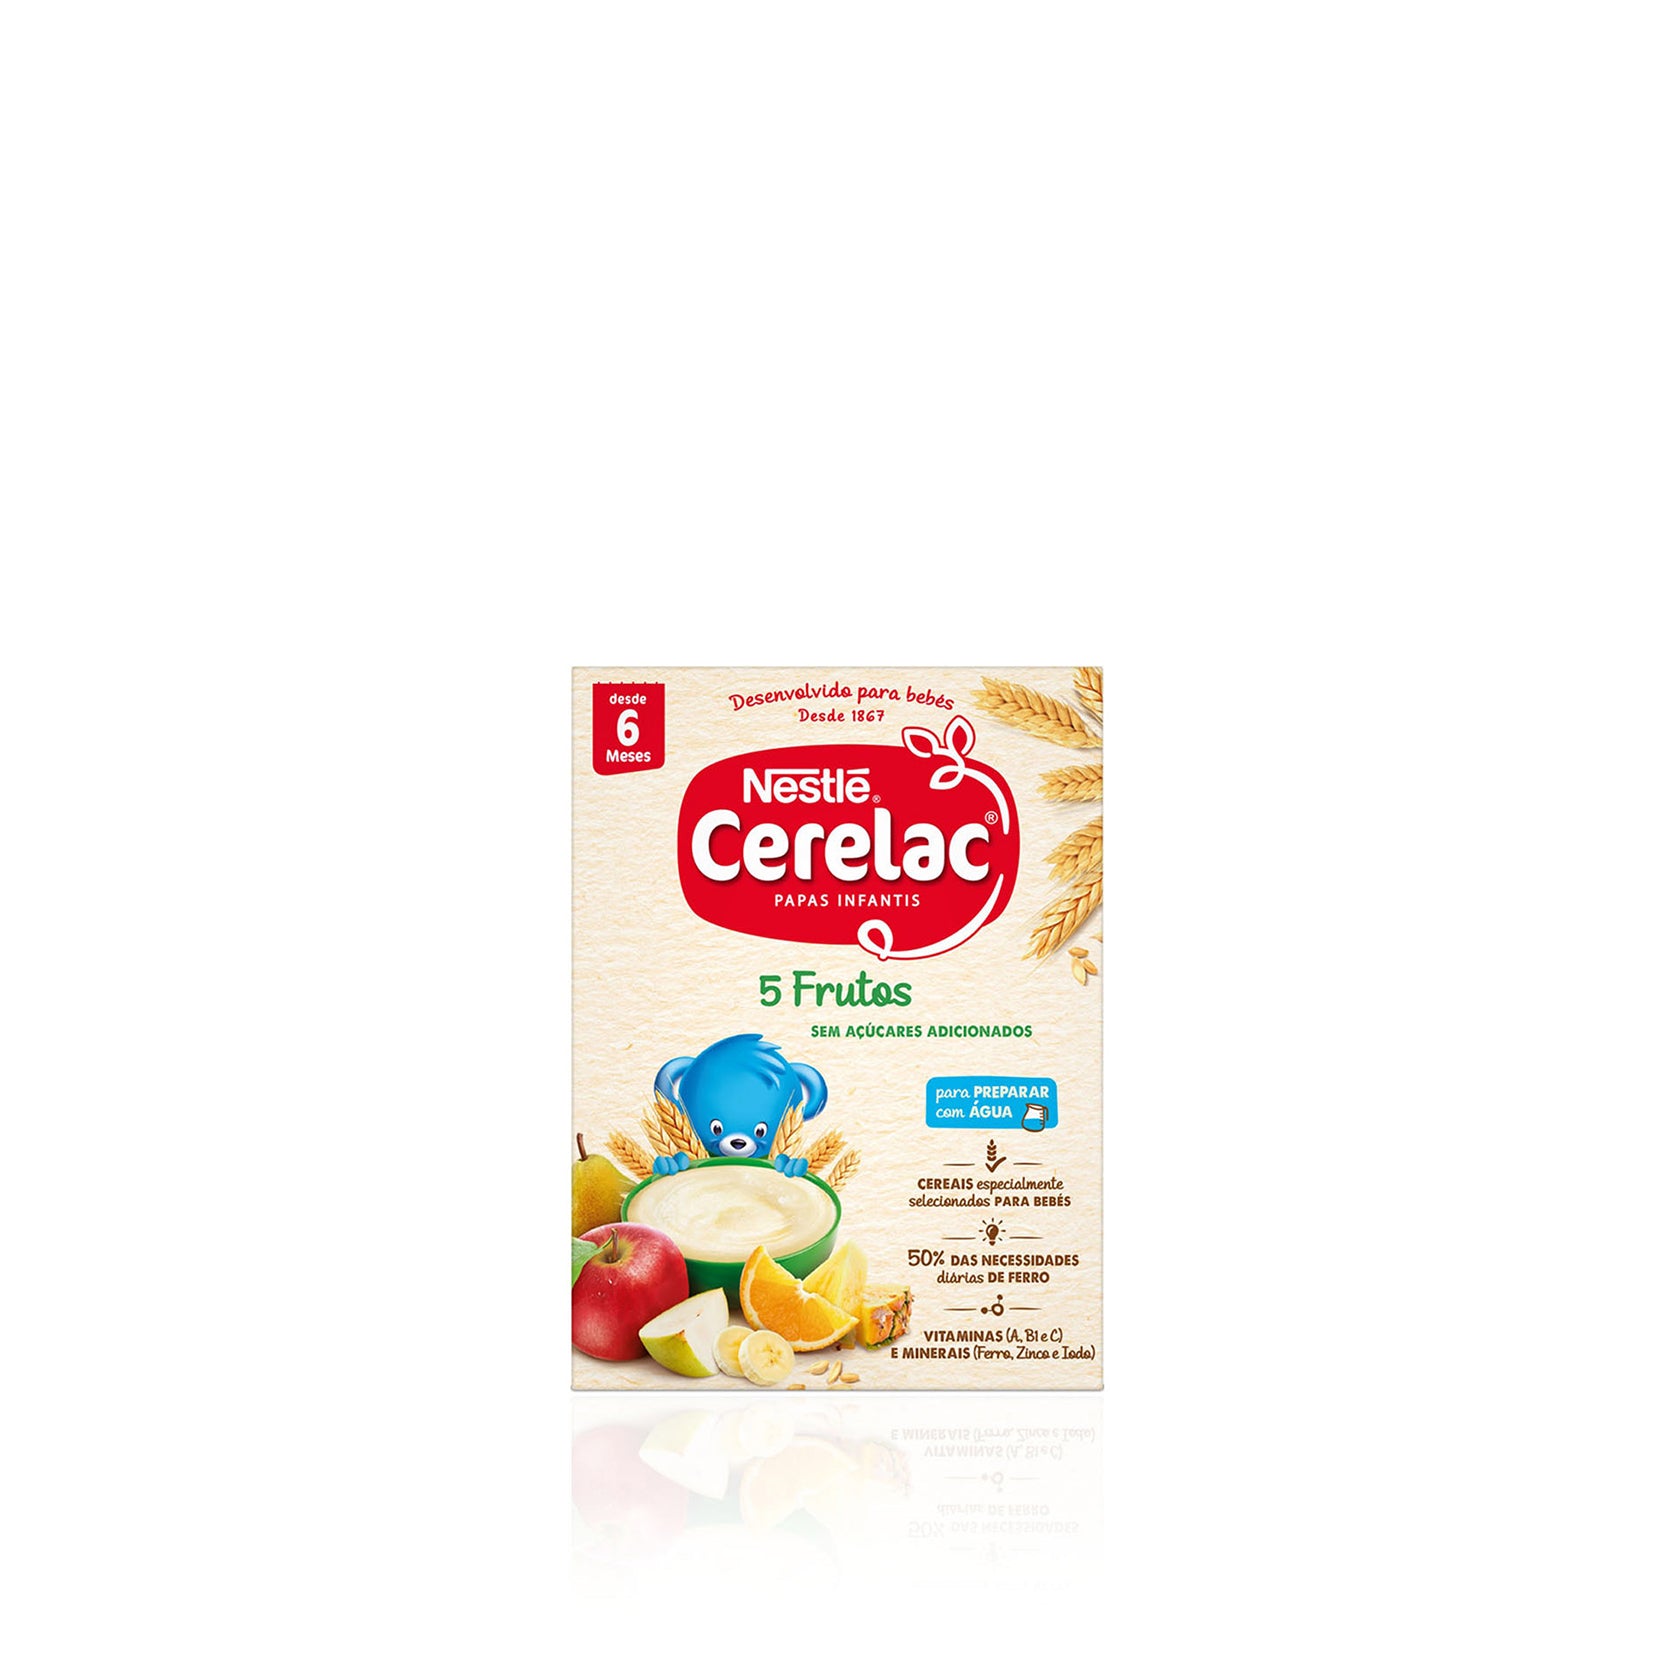 Nestlé Cerelac Leche Harina 5 Frutas (+6 meses) 250 gr - Pack 2 x 250 gr